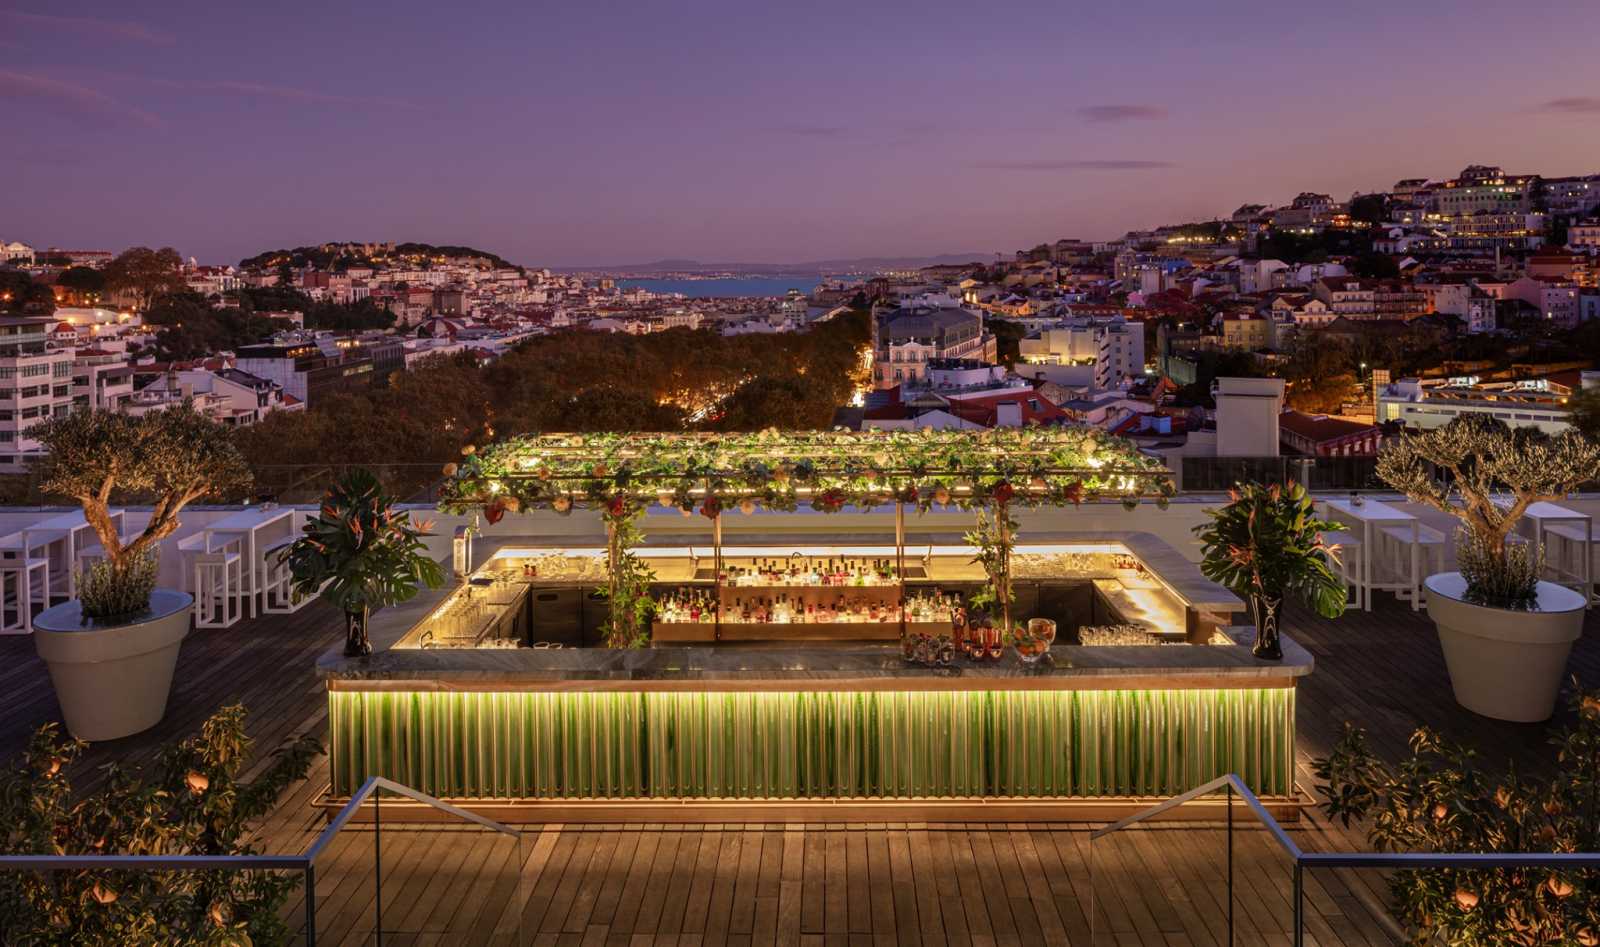 Rooftop Sky Bar by Seen - Hotel Tivoli in Lisbon